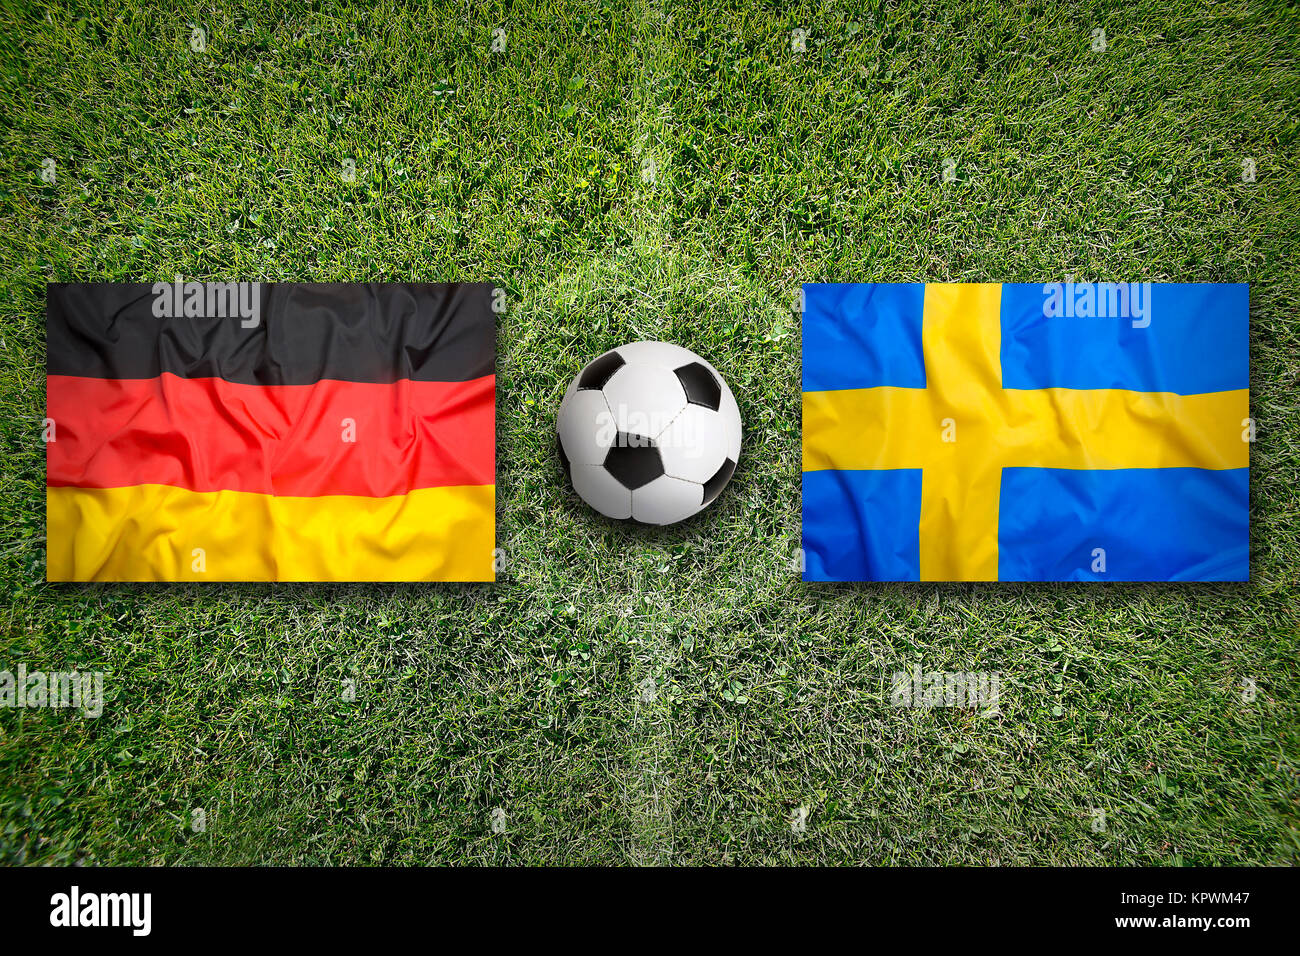 Germany vs. Sweden flags on soccer field Stock Photo Alamy